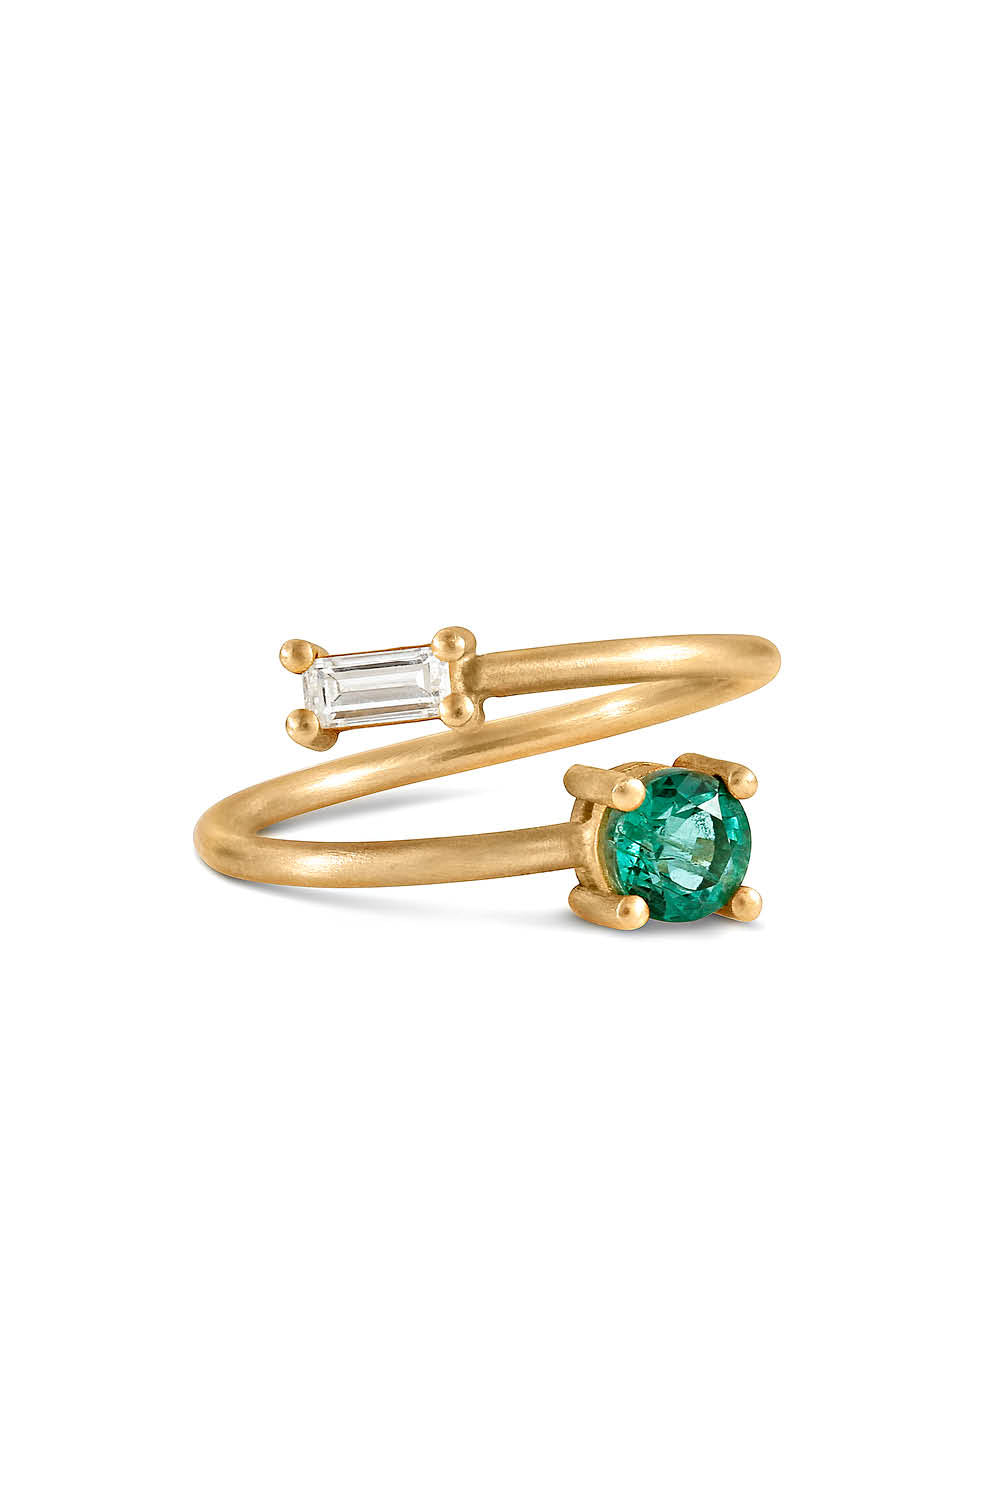 Sandy Leong Emerald and Diamond Twist Ring